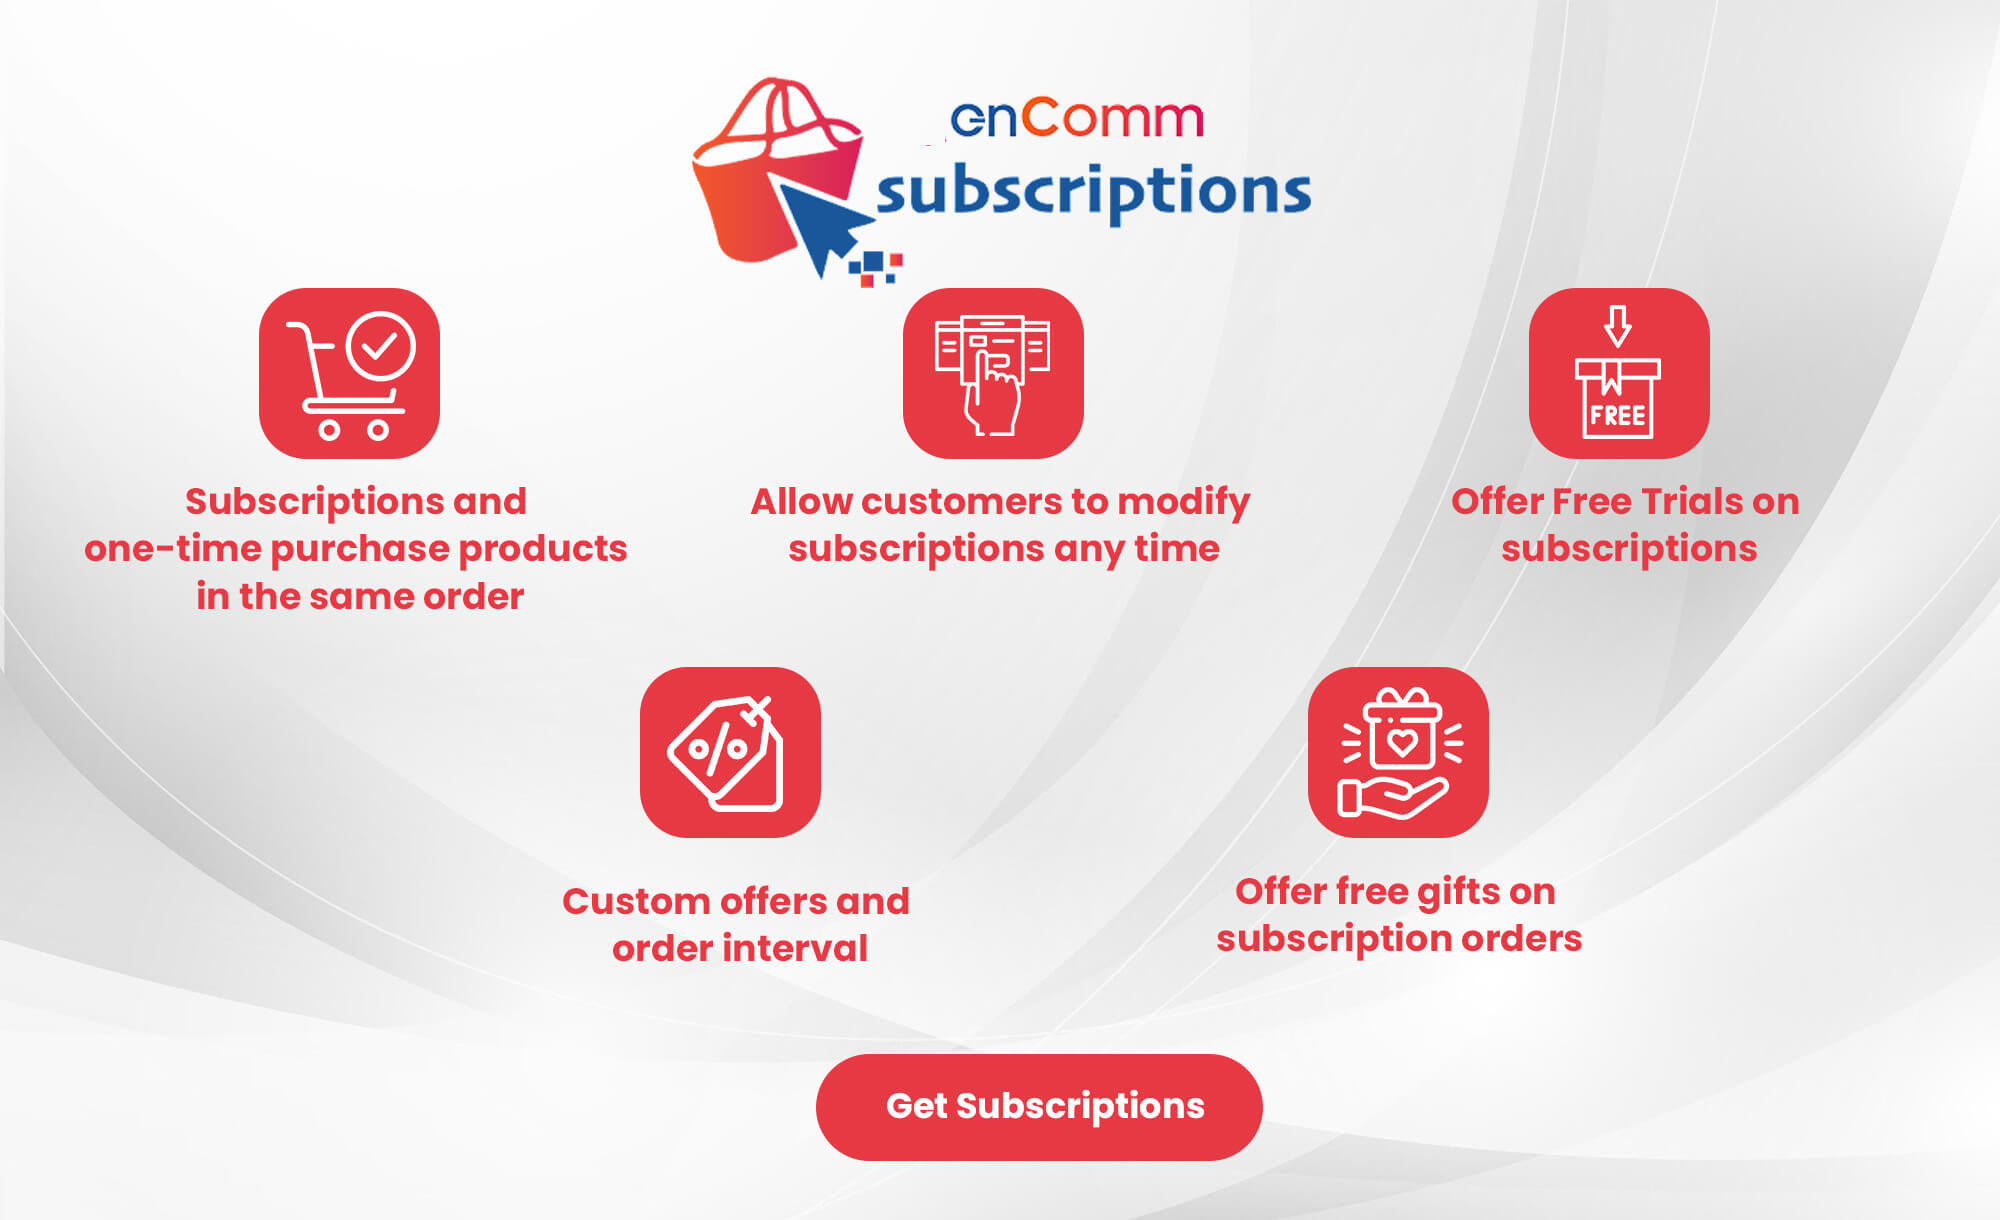 enComm Subscriptions